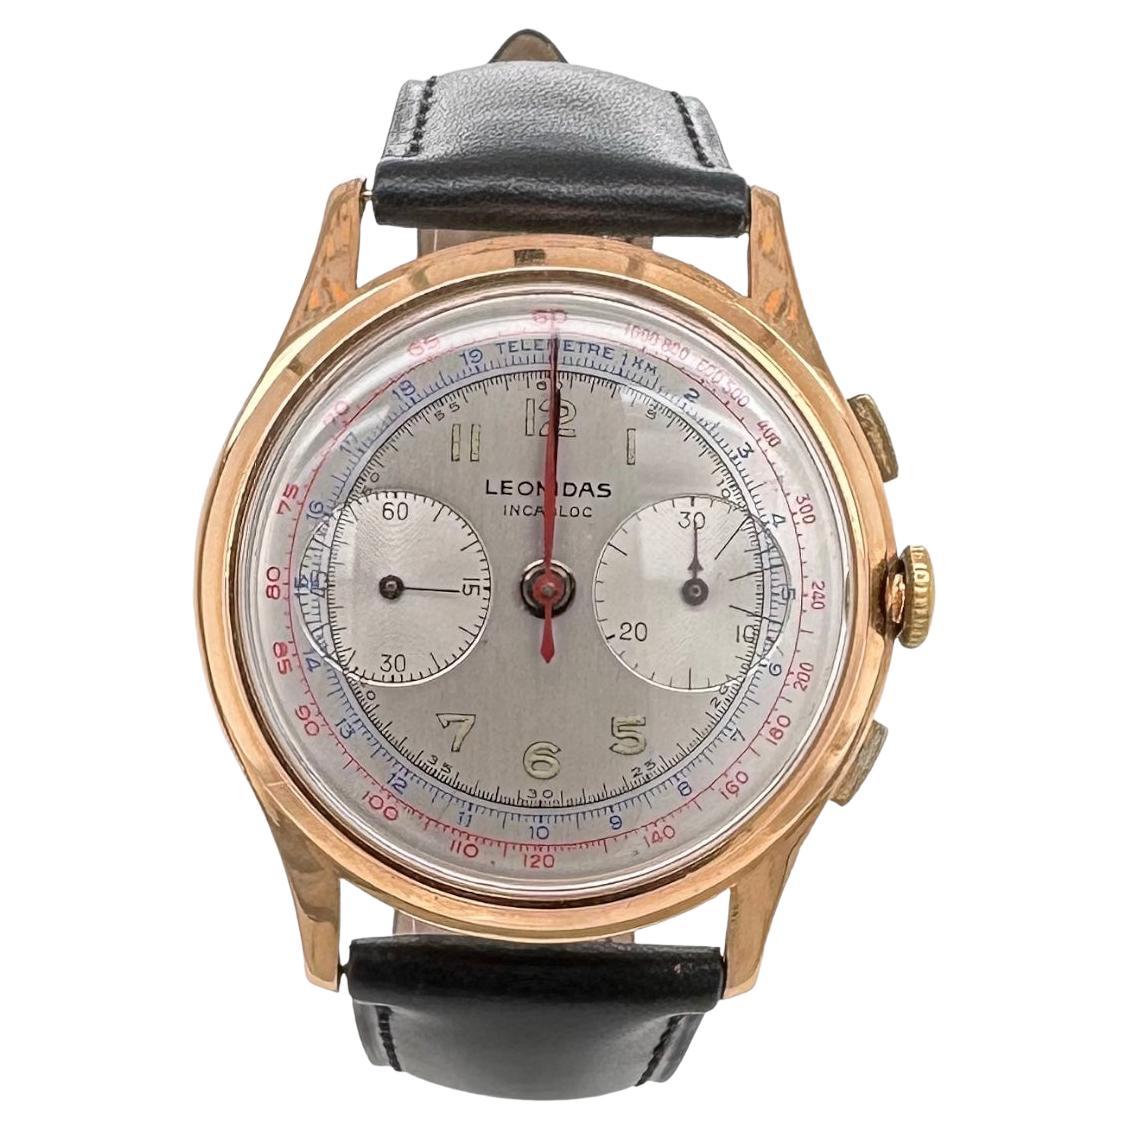 Leonidas Chronograph Wrist Watch 18 Karat Yellow Gold Case For Sale